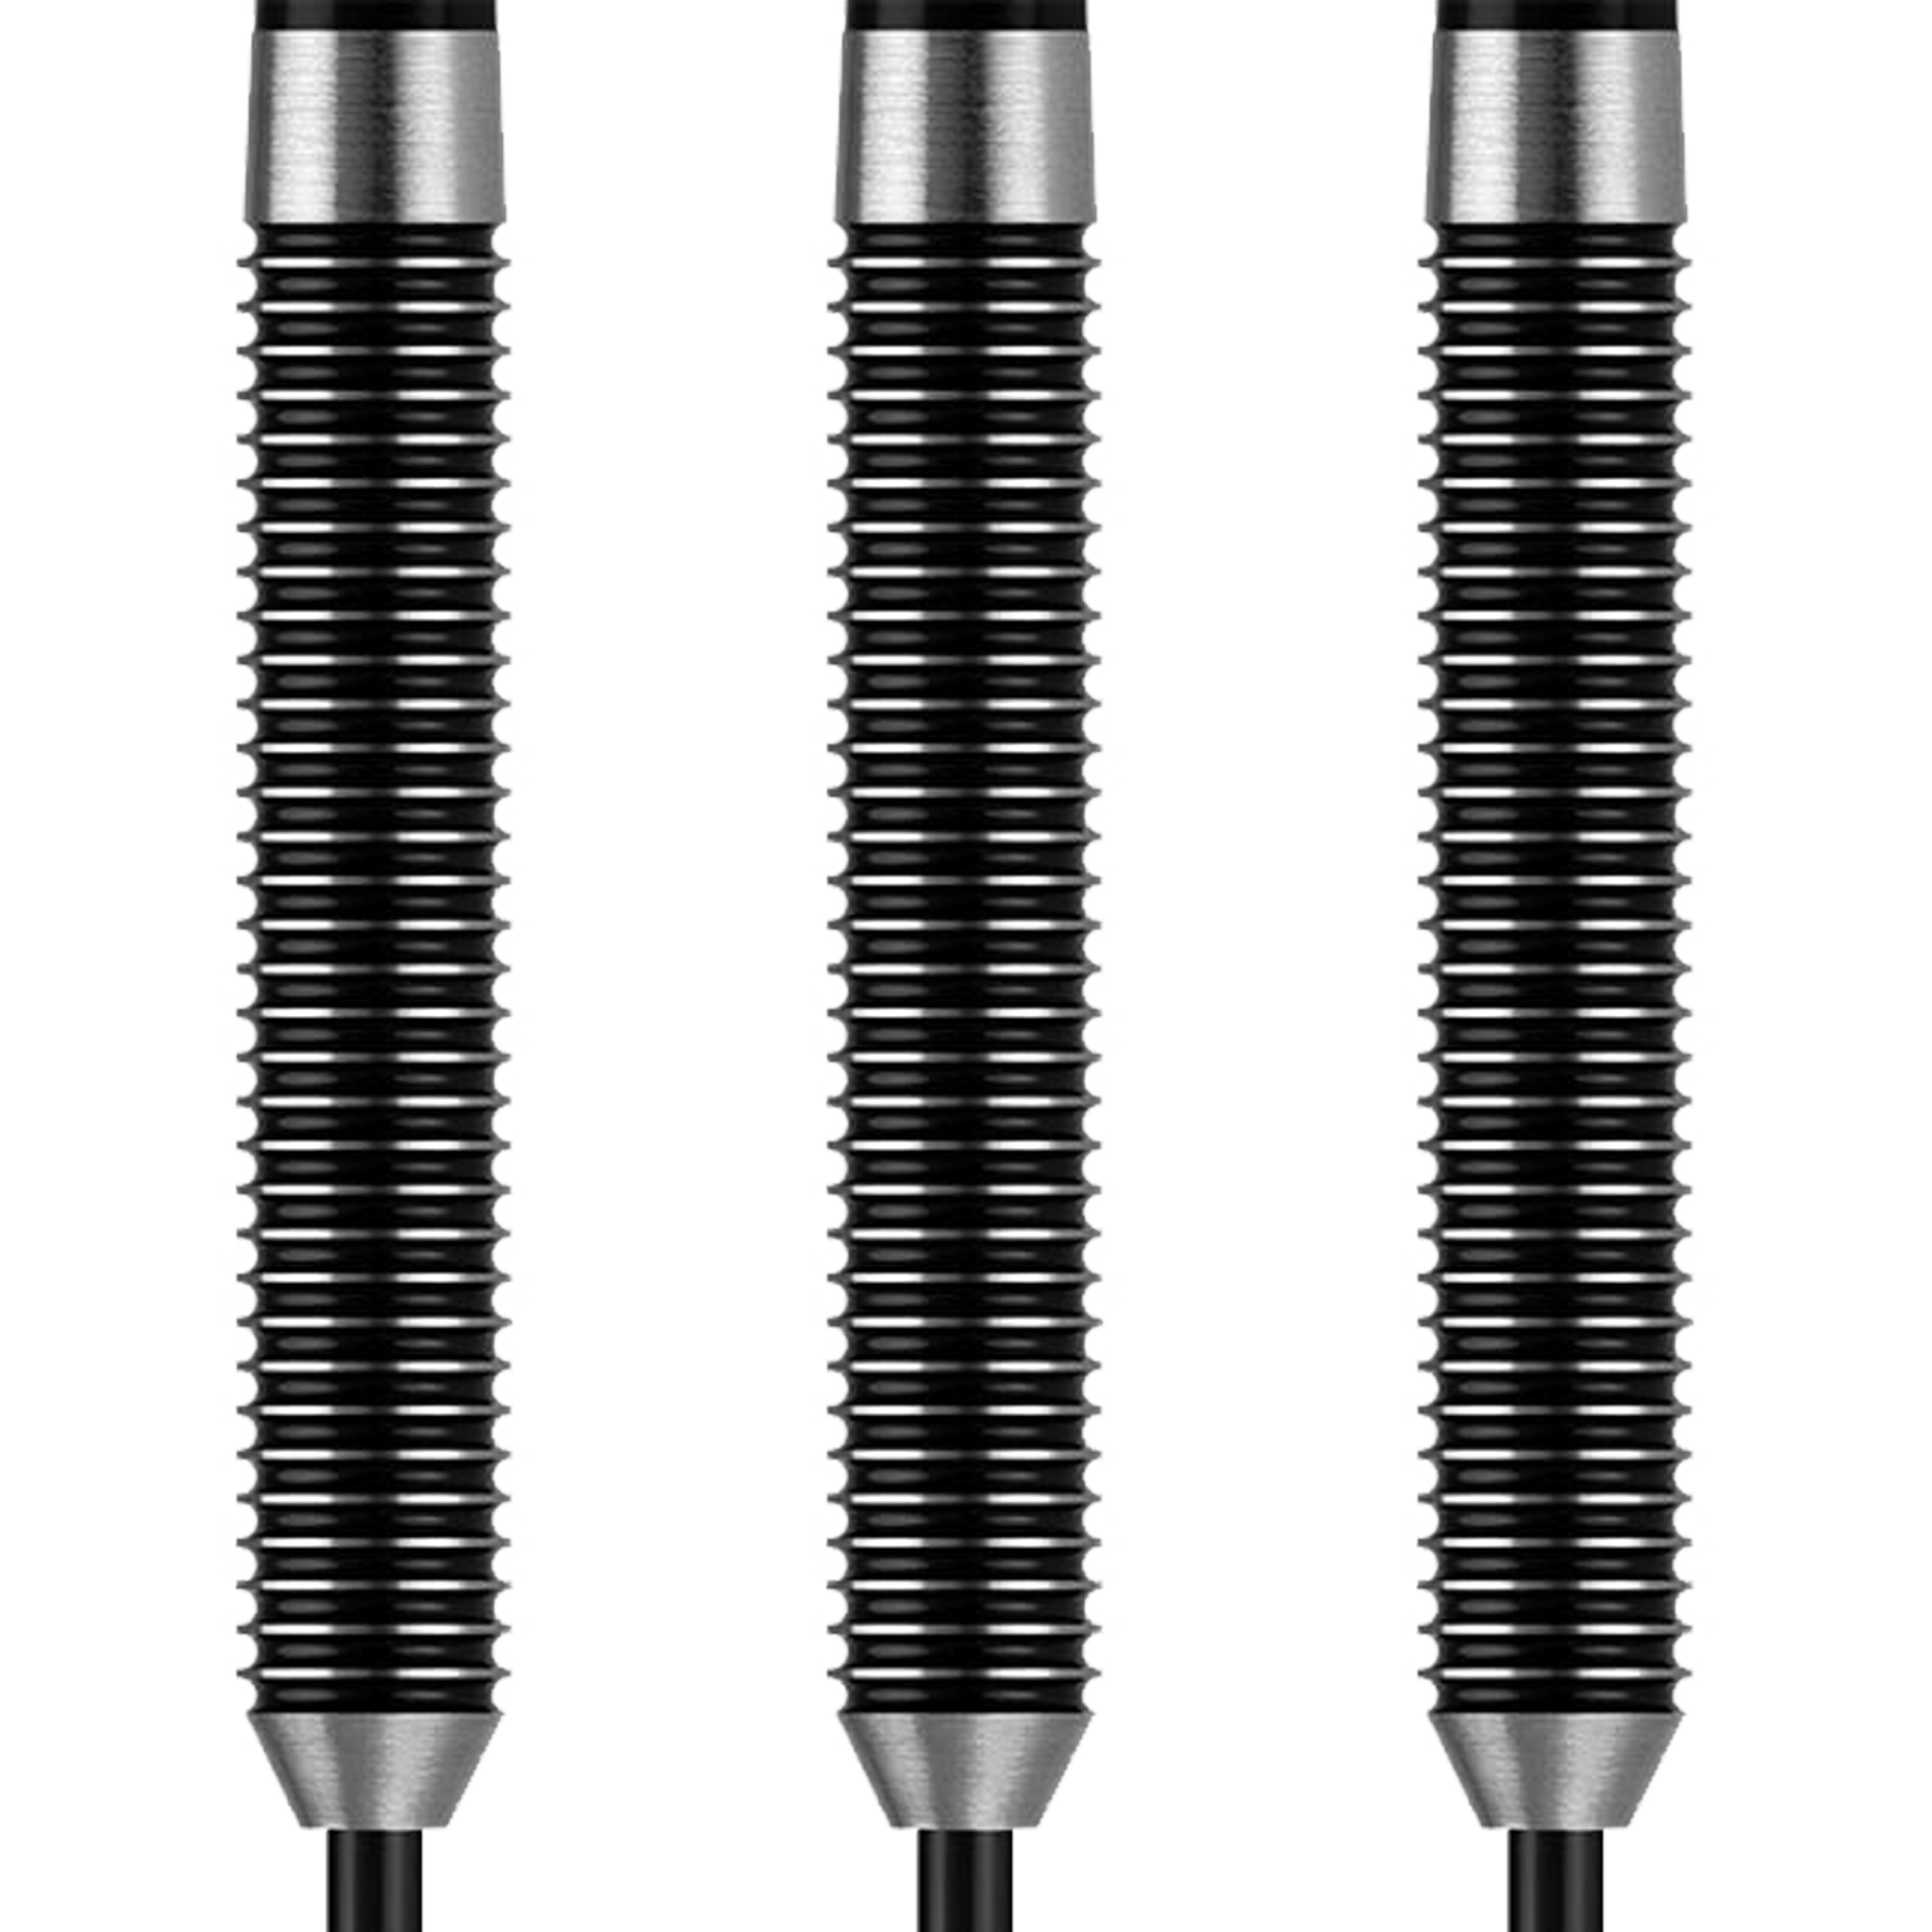 Designa Ultralites V2 M2 Steel Tip Darts - 80% Tungsten - 14 Grams Darts